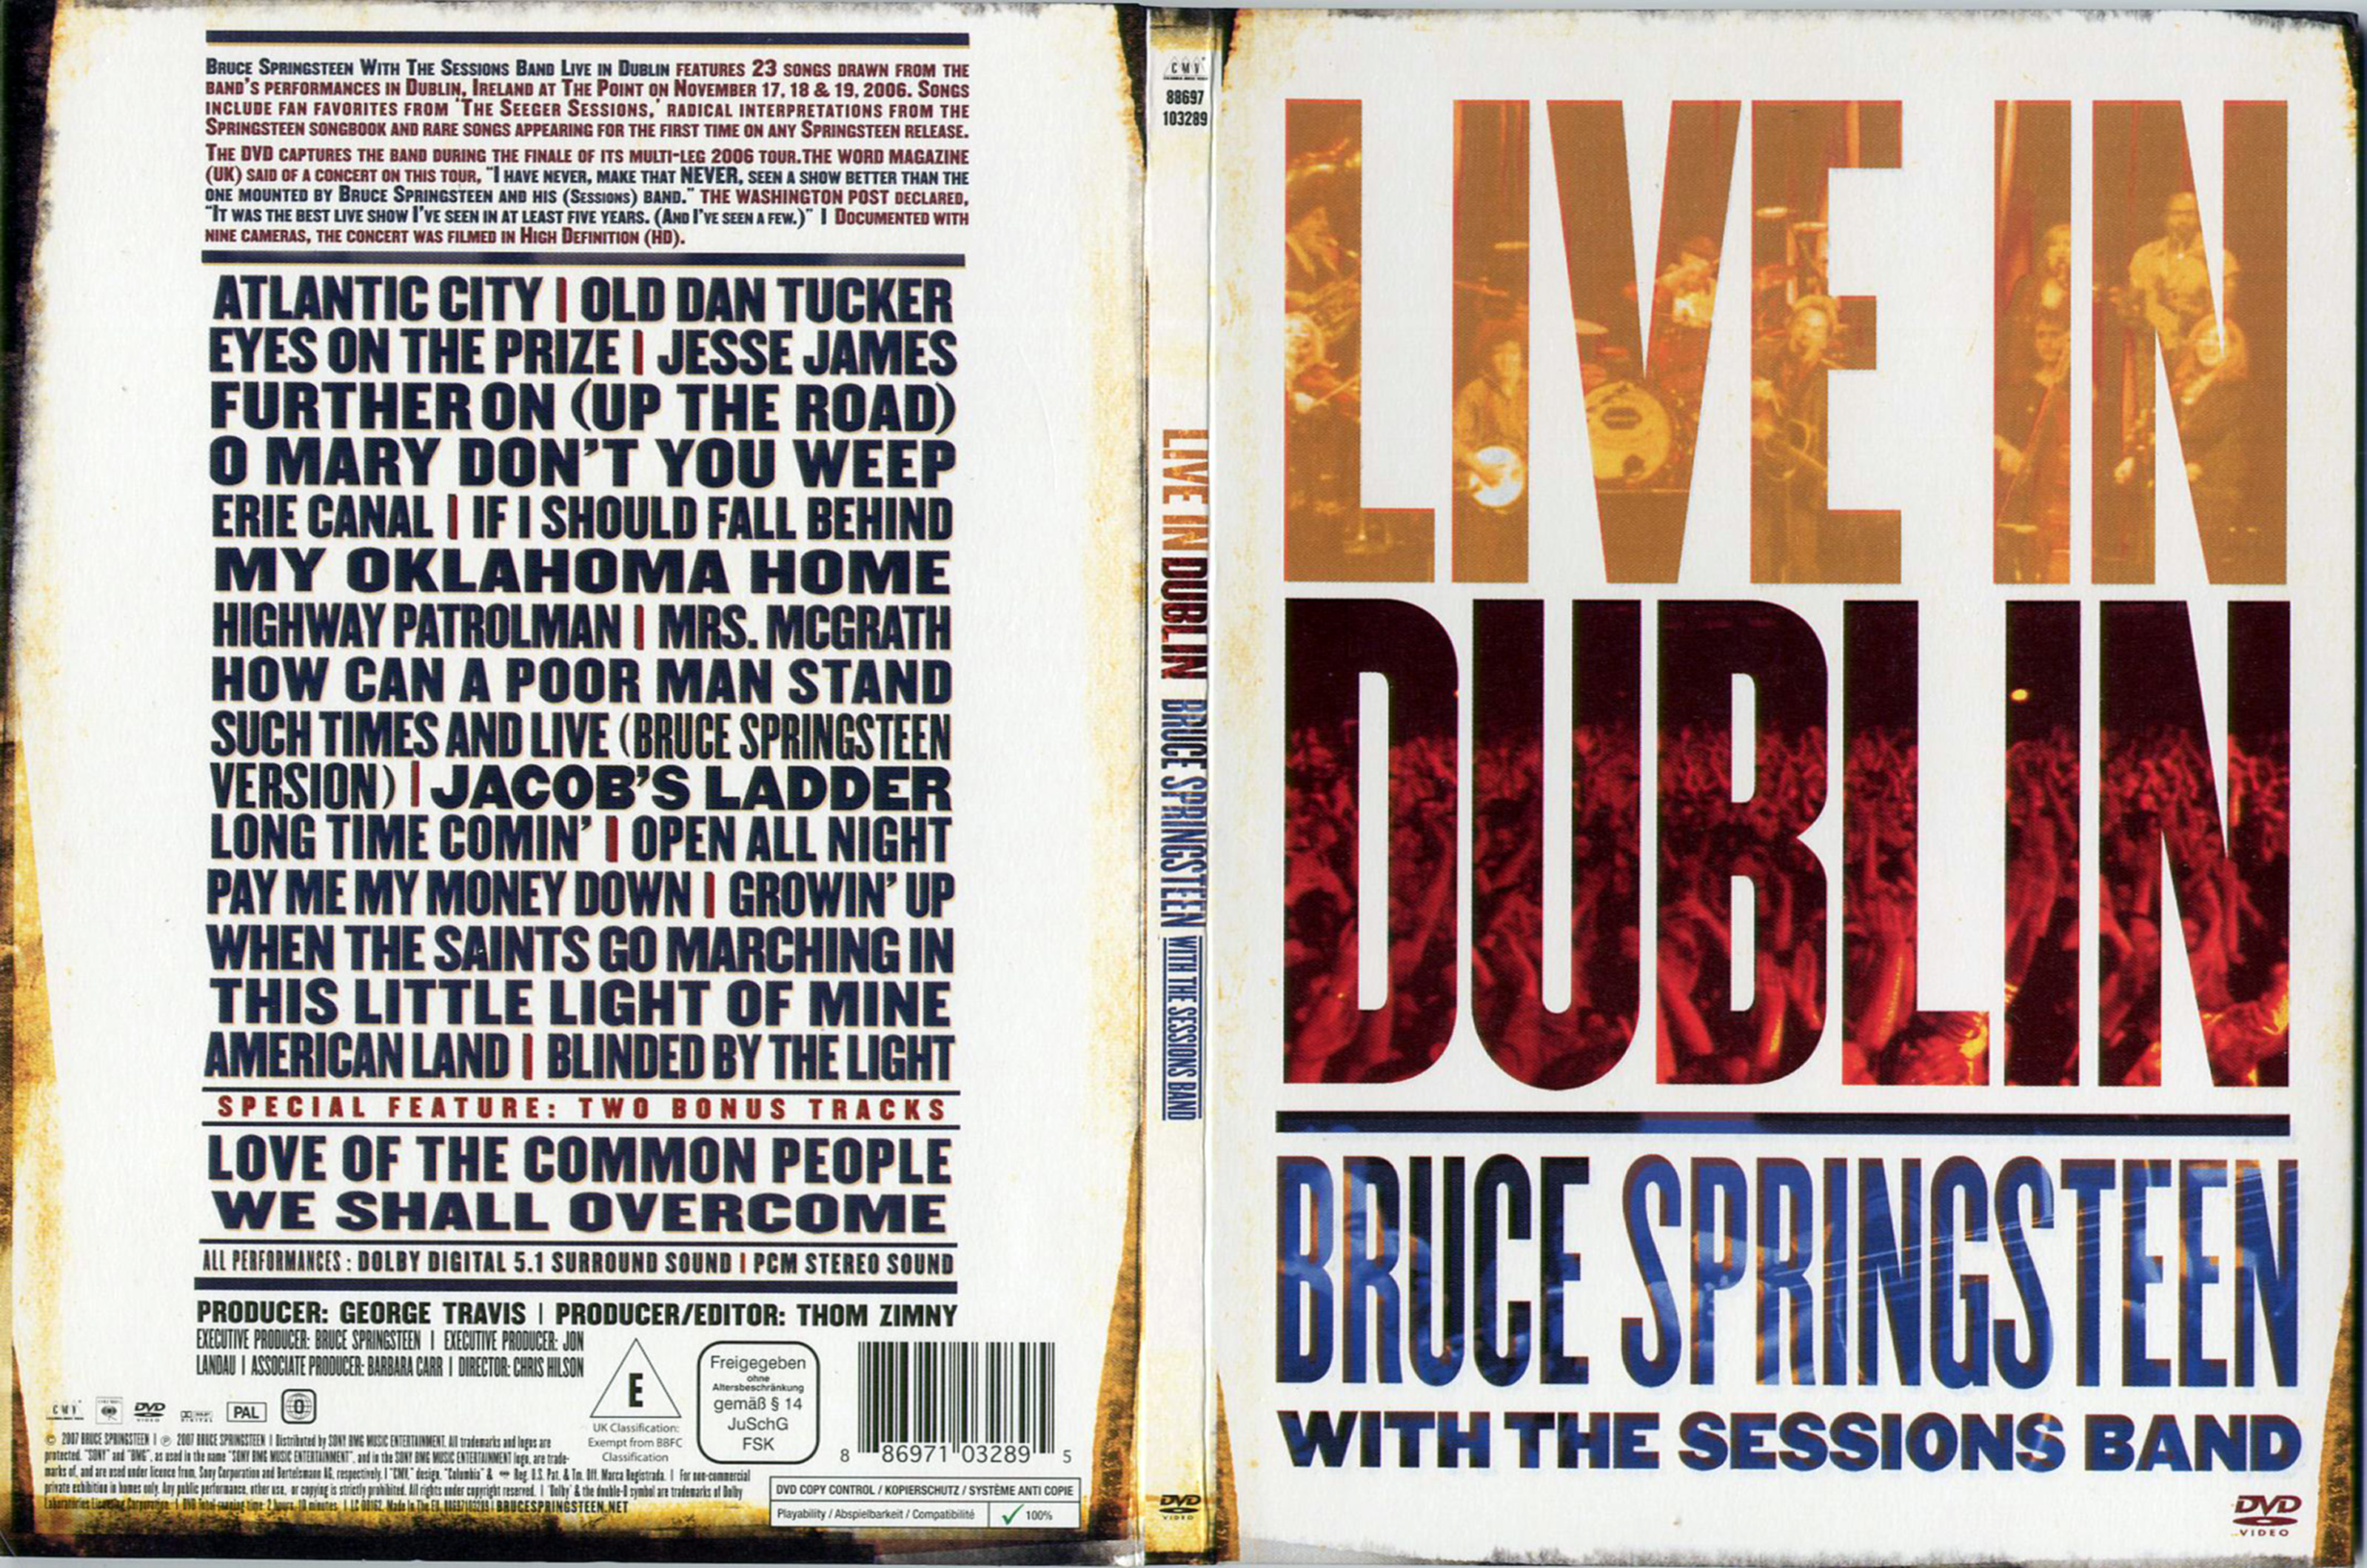 Jaquette DVD Bruce Springsteen live in dublin